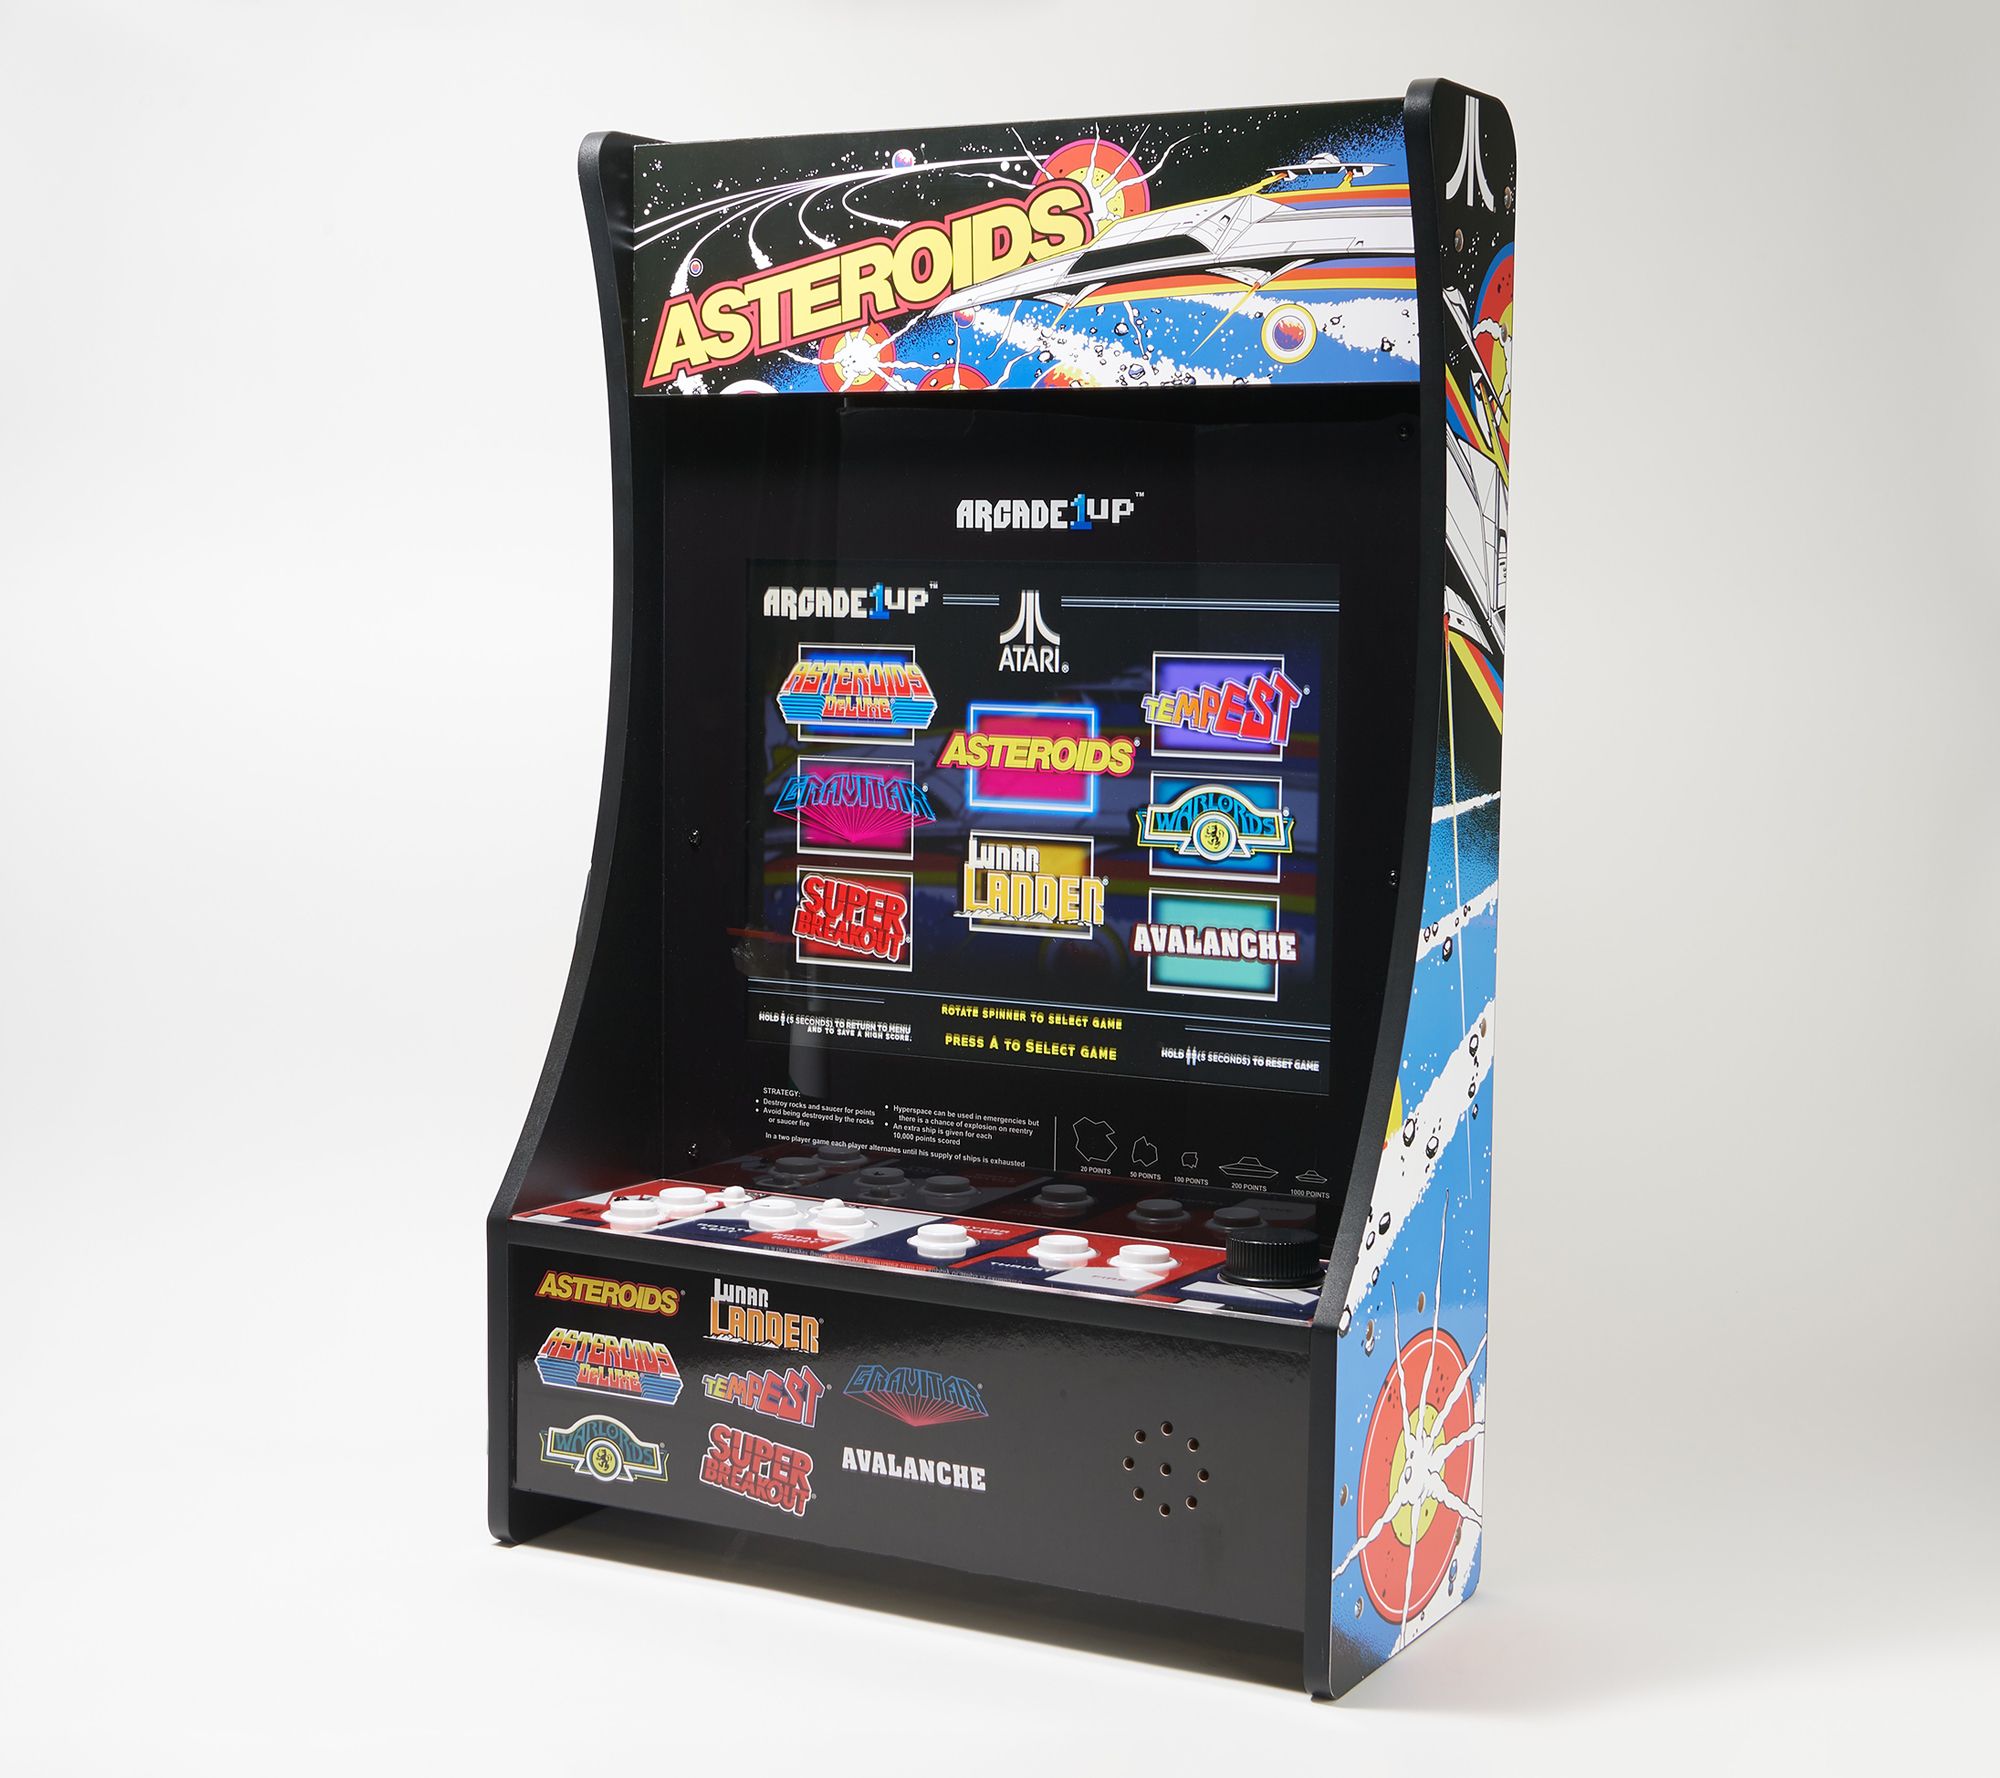 $42 off a portable home arcade machine